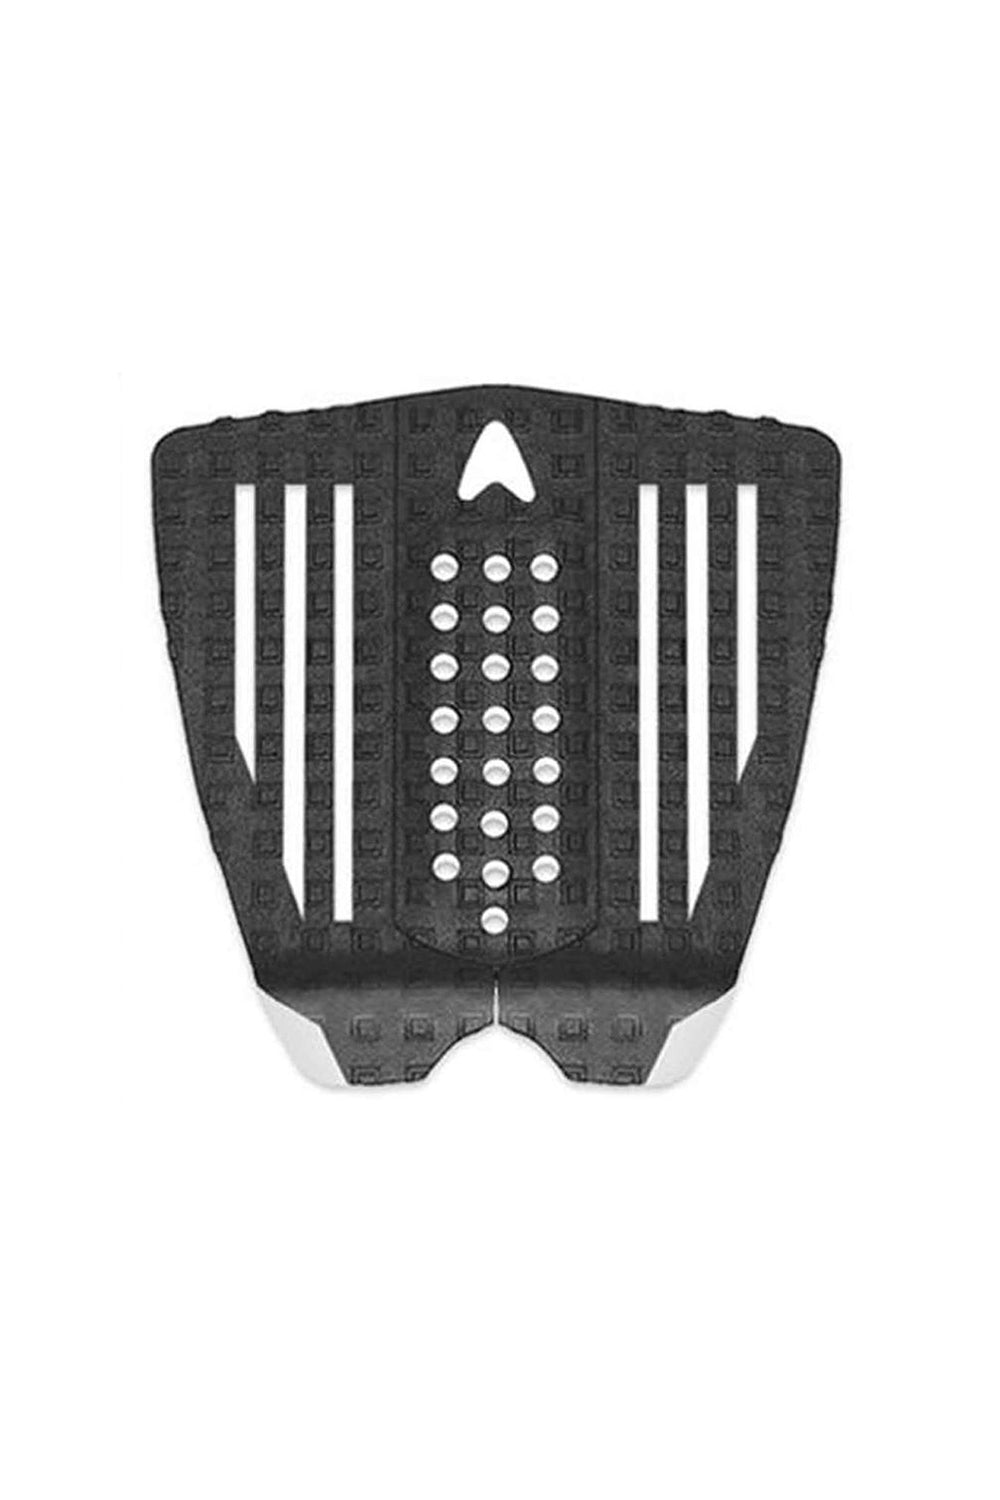 Astro Deck Gudauskus Pad - Black / White Grip Pad Traction